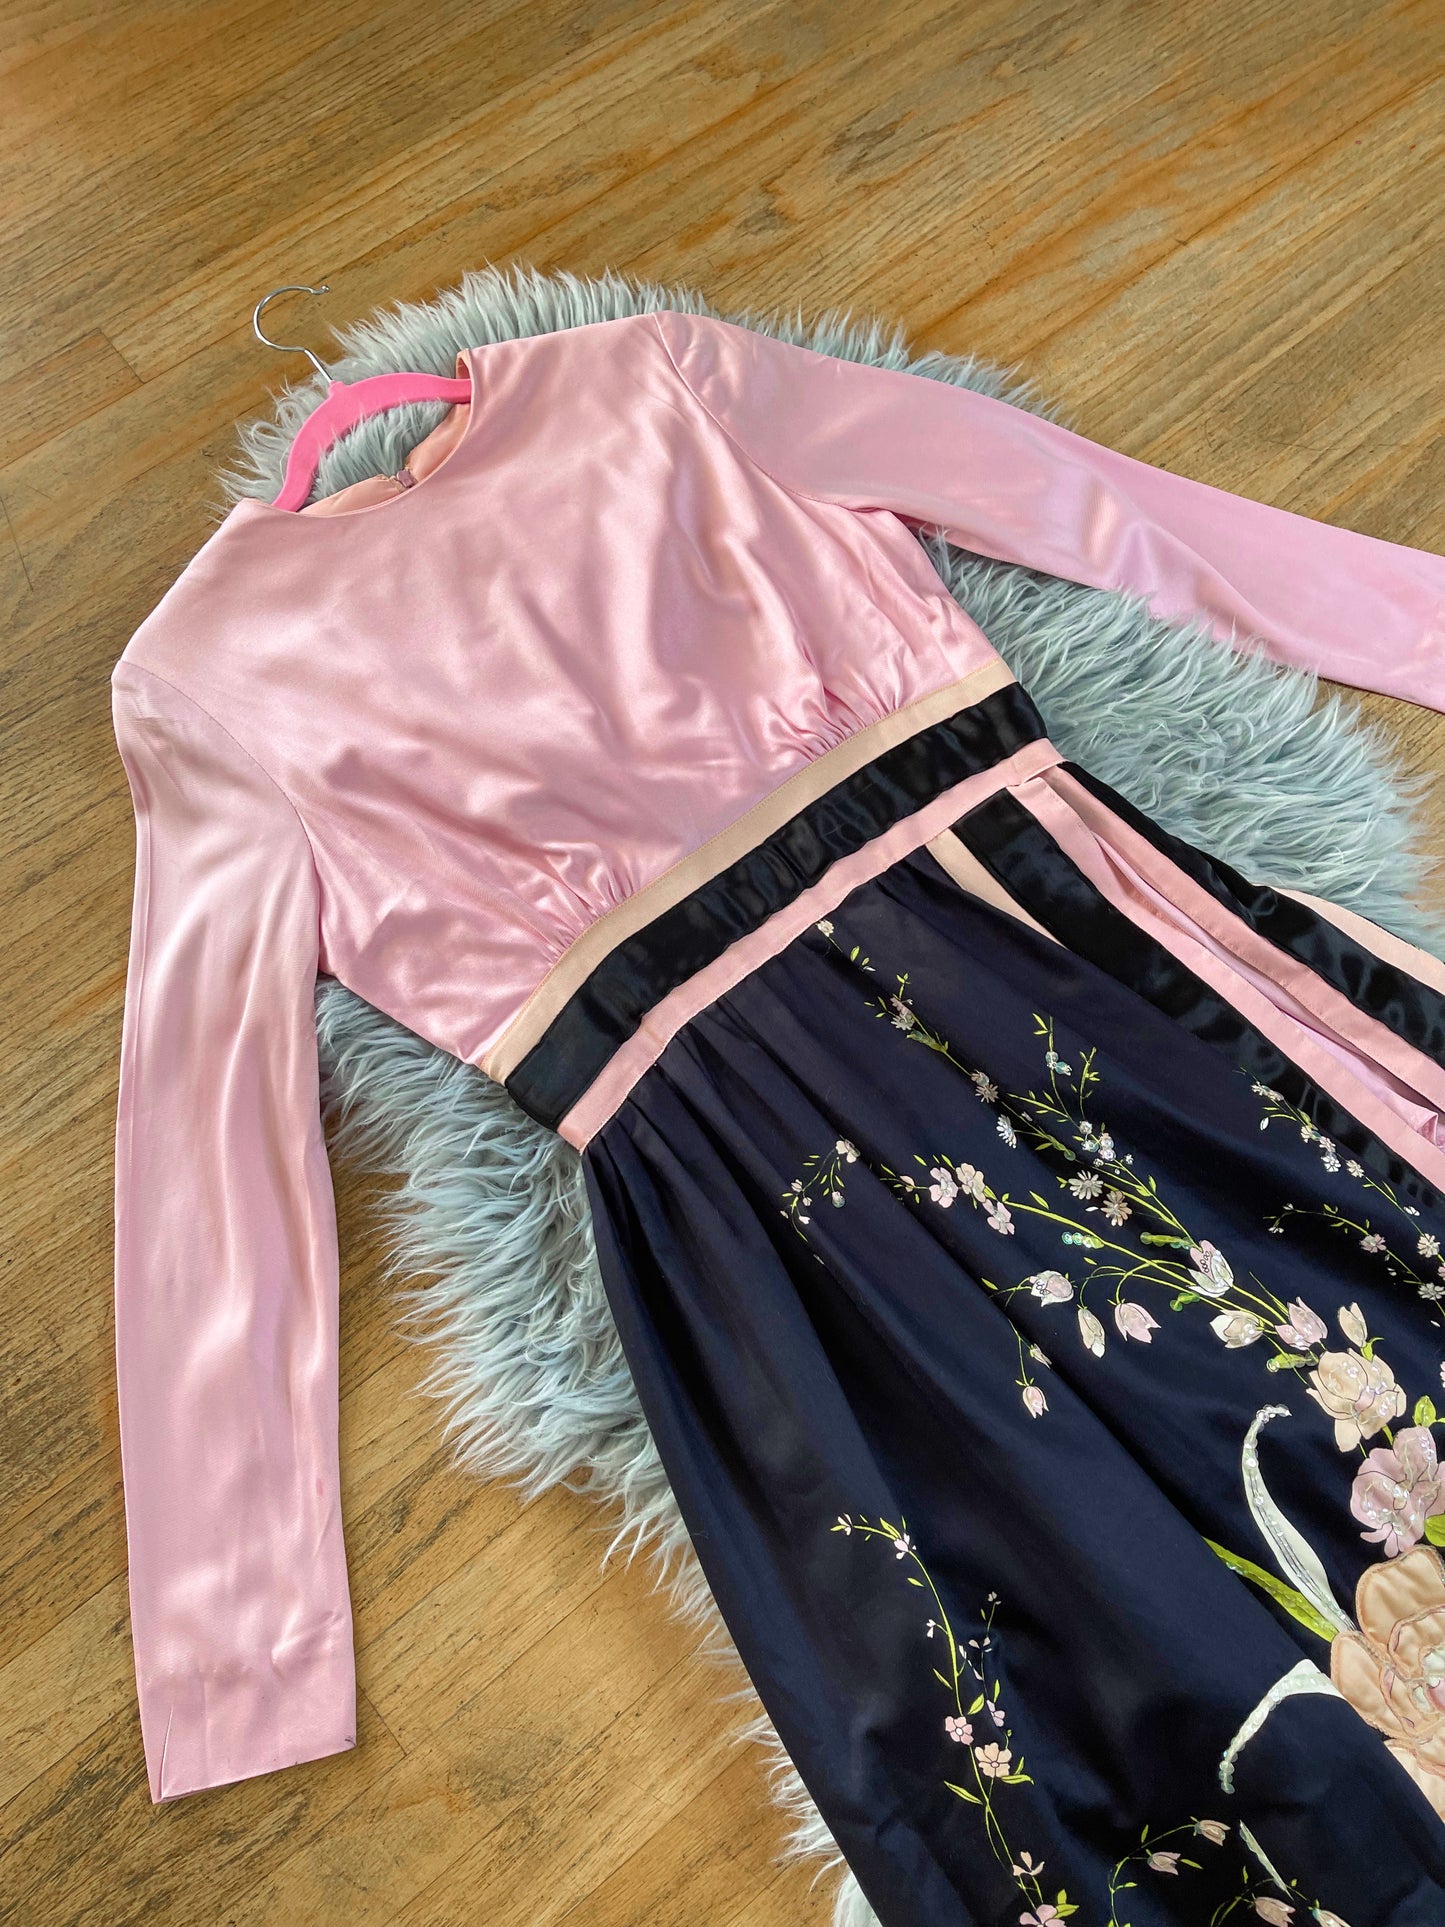 Vintage 60s / 70s Powder Pink Floral Sequins High Slit Maxi Dress Best Fits Sizes S-M